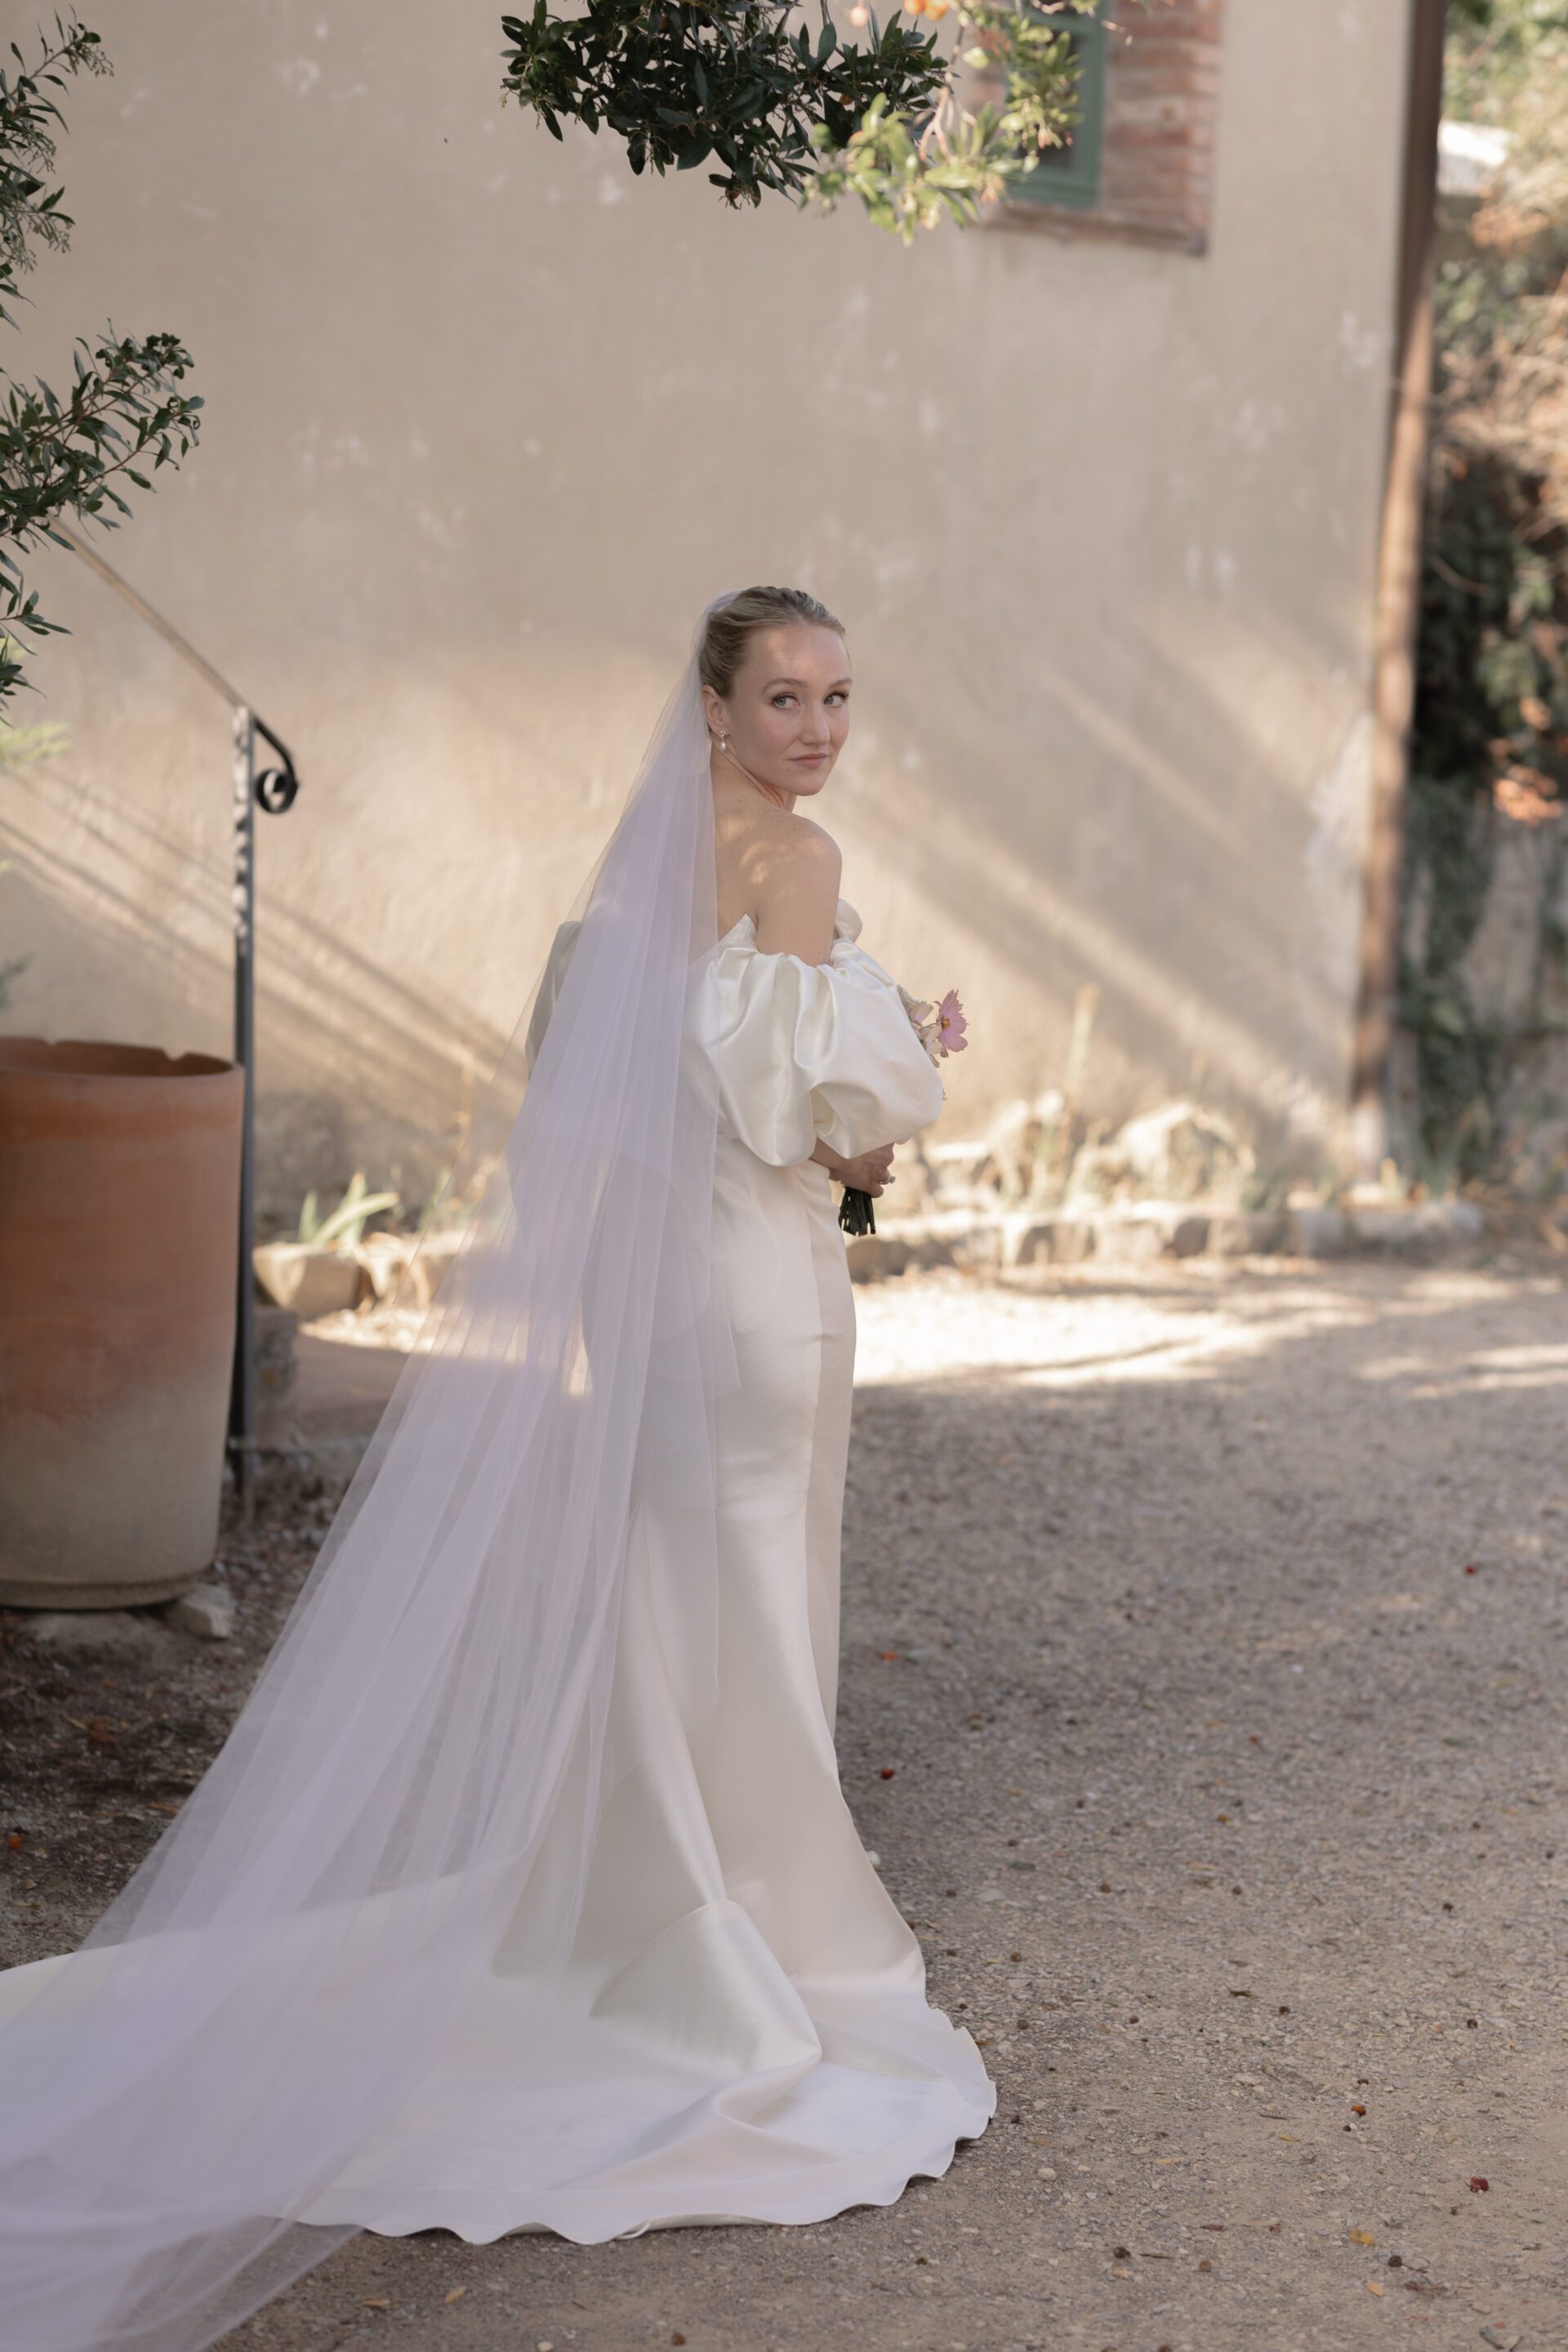 Destination wedding photographer captures bridal portrait at Italian wedding